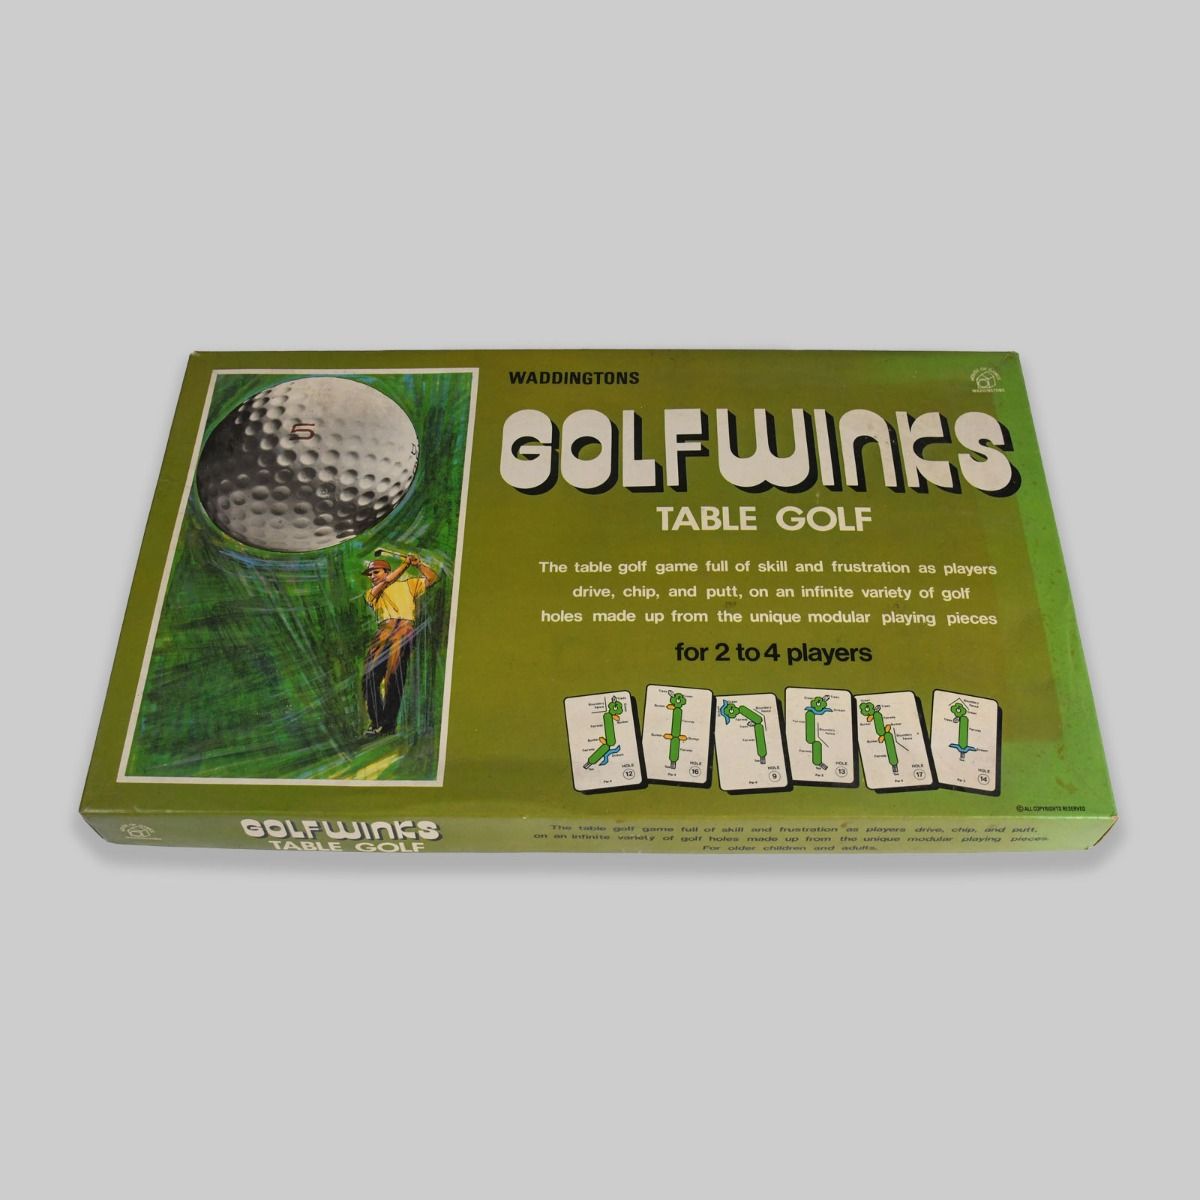 'Waddington's Golf Winks Table Golf' 1973 Board Game